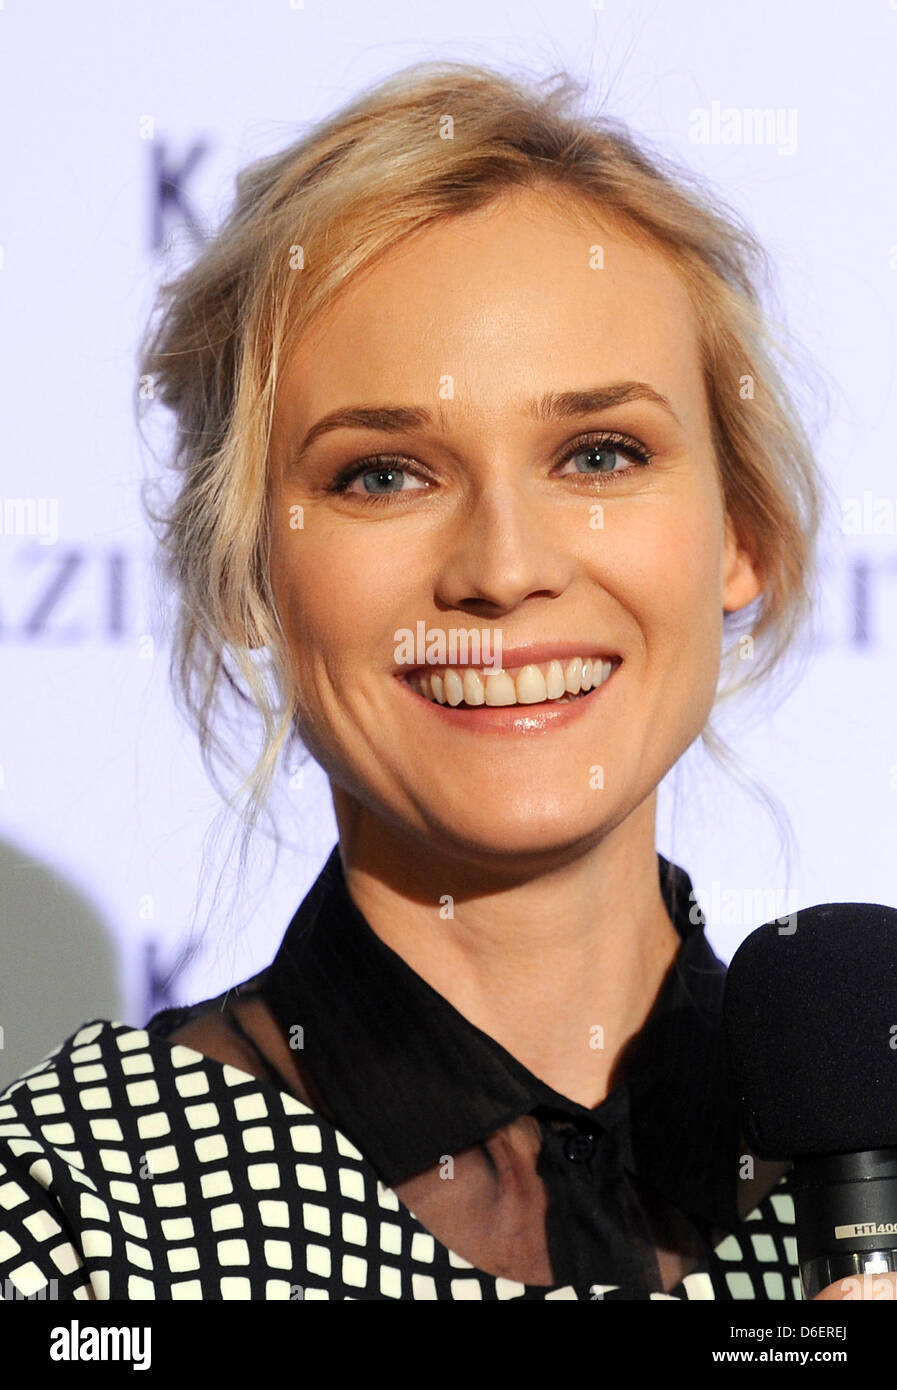 German actress diane kruger smiles hi-res stock photography and